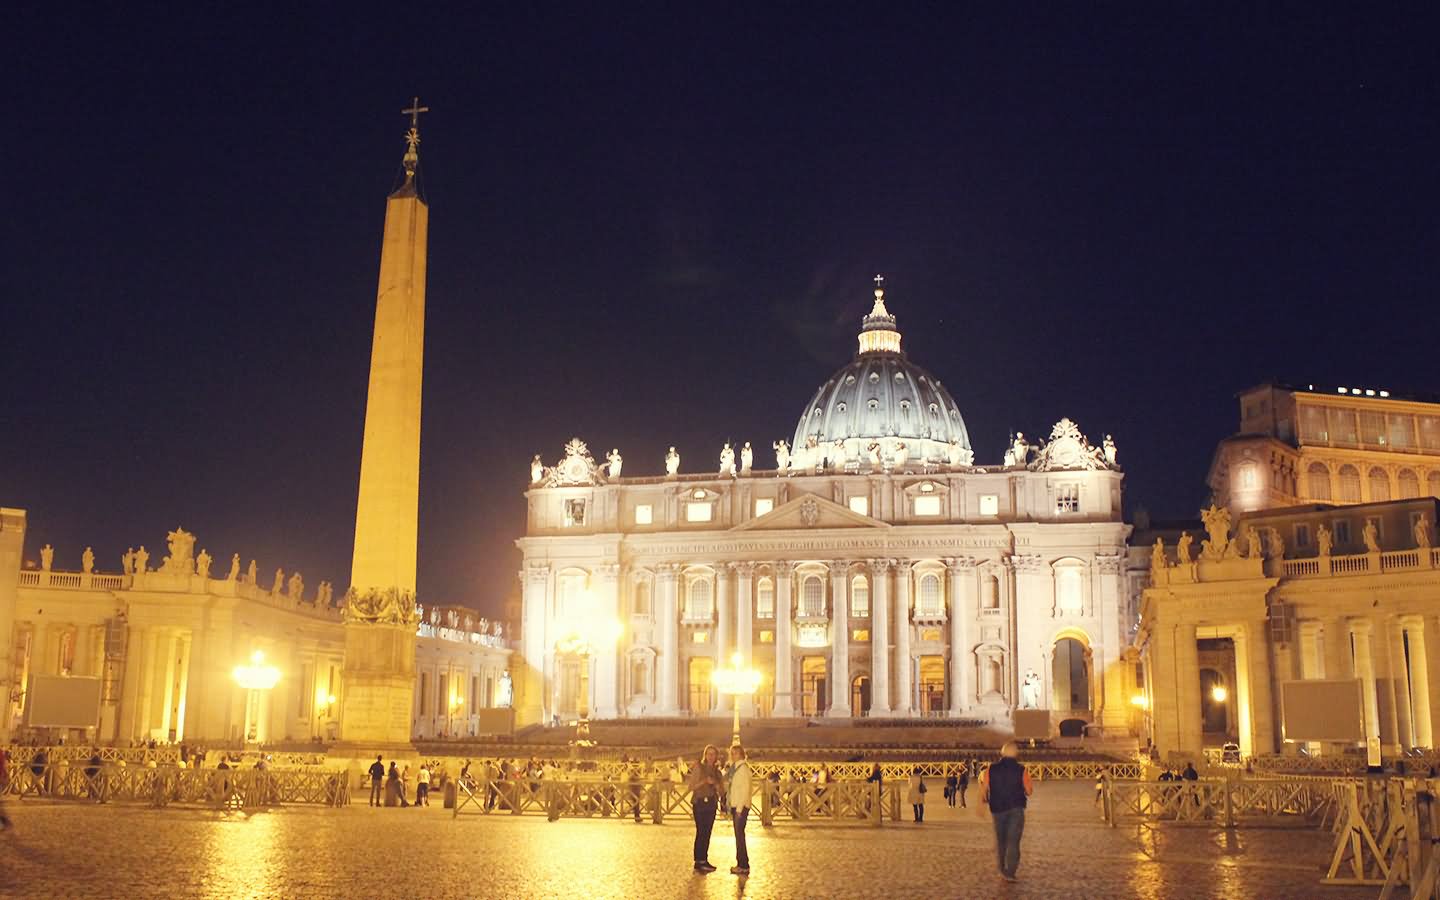 St. Peter's Basilica Beauty At Night